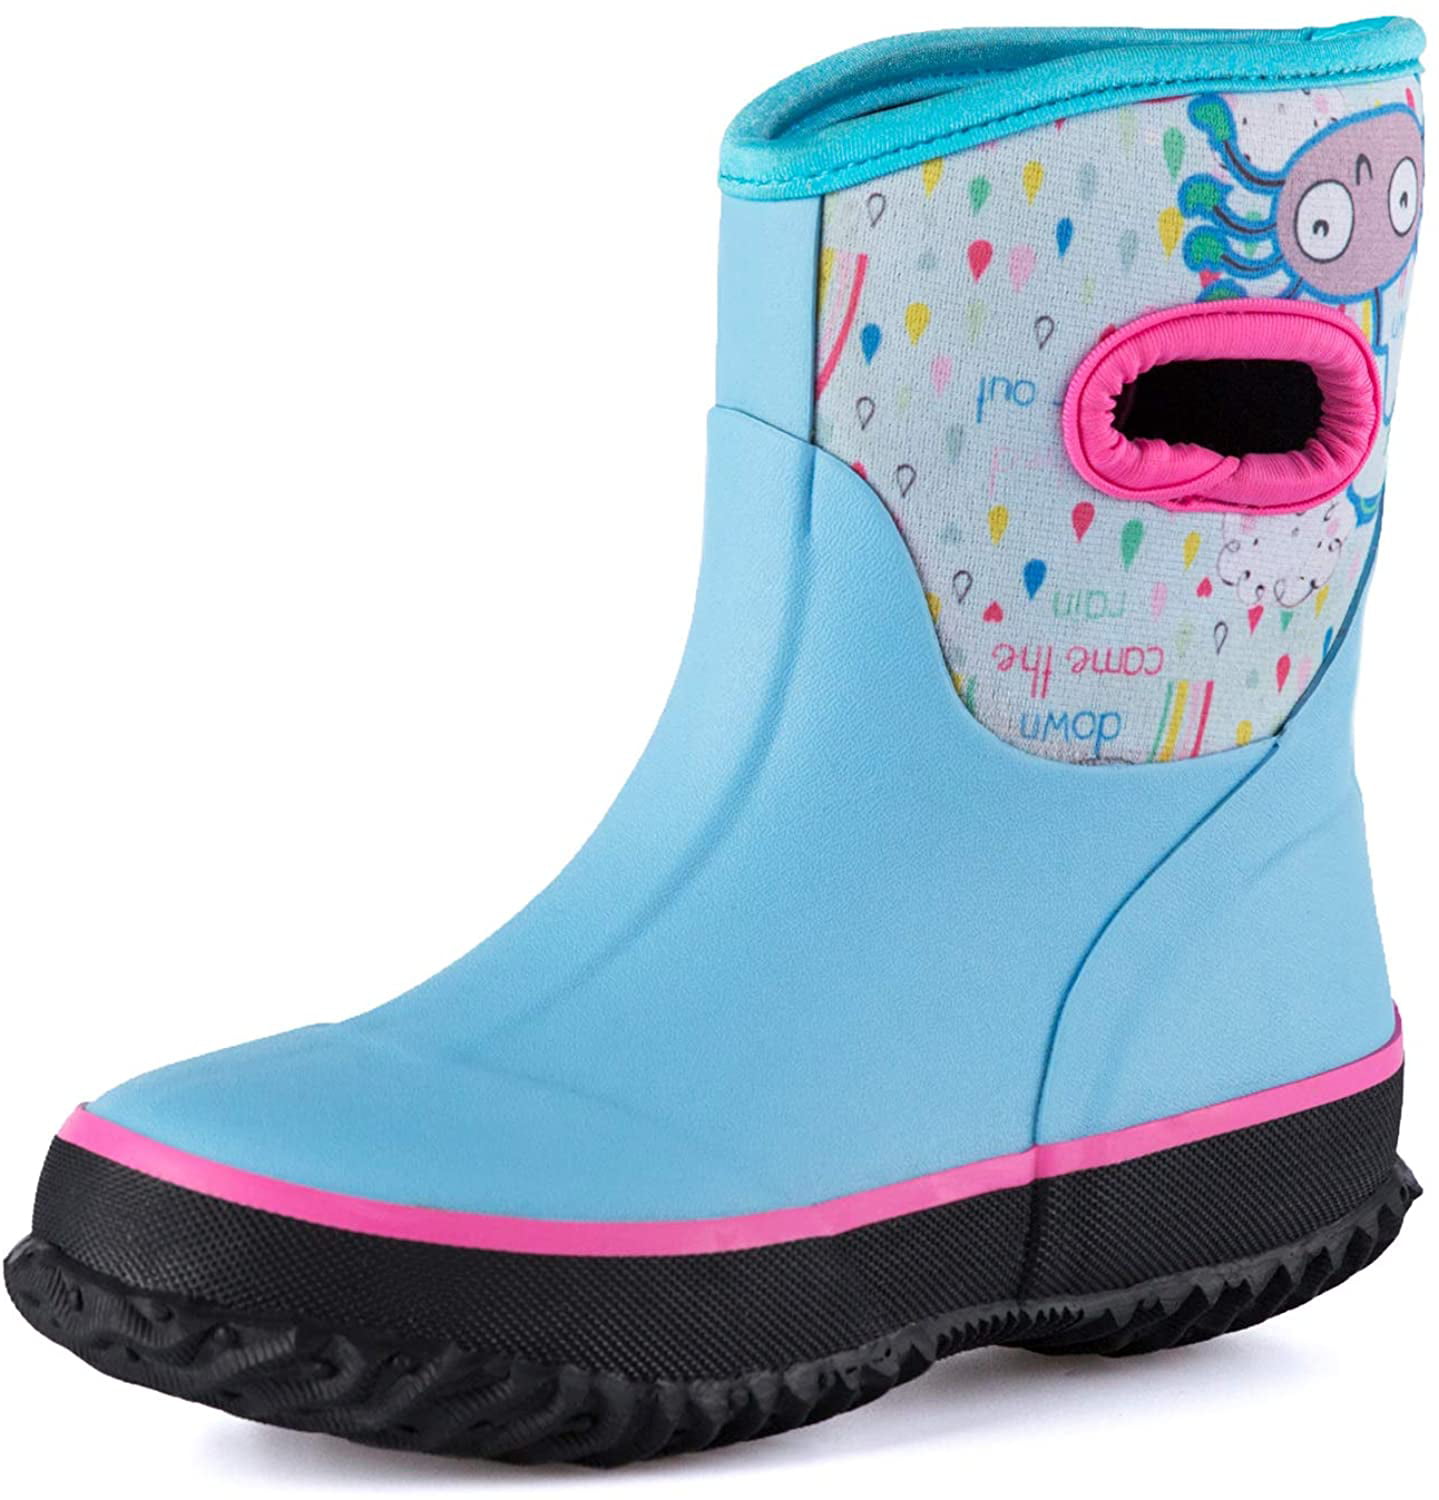 K KOMFORME Neoprene Warm Rain Boots Winter Snow Boots for Toddler and Little kids 